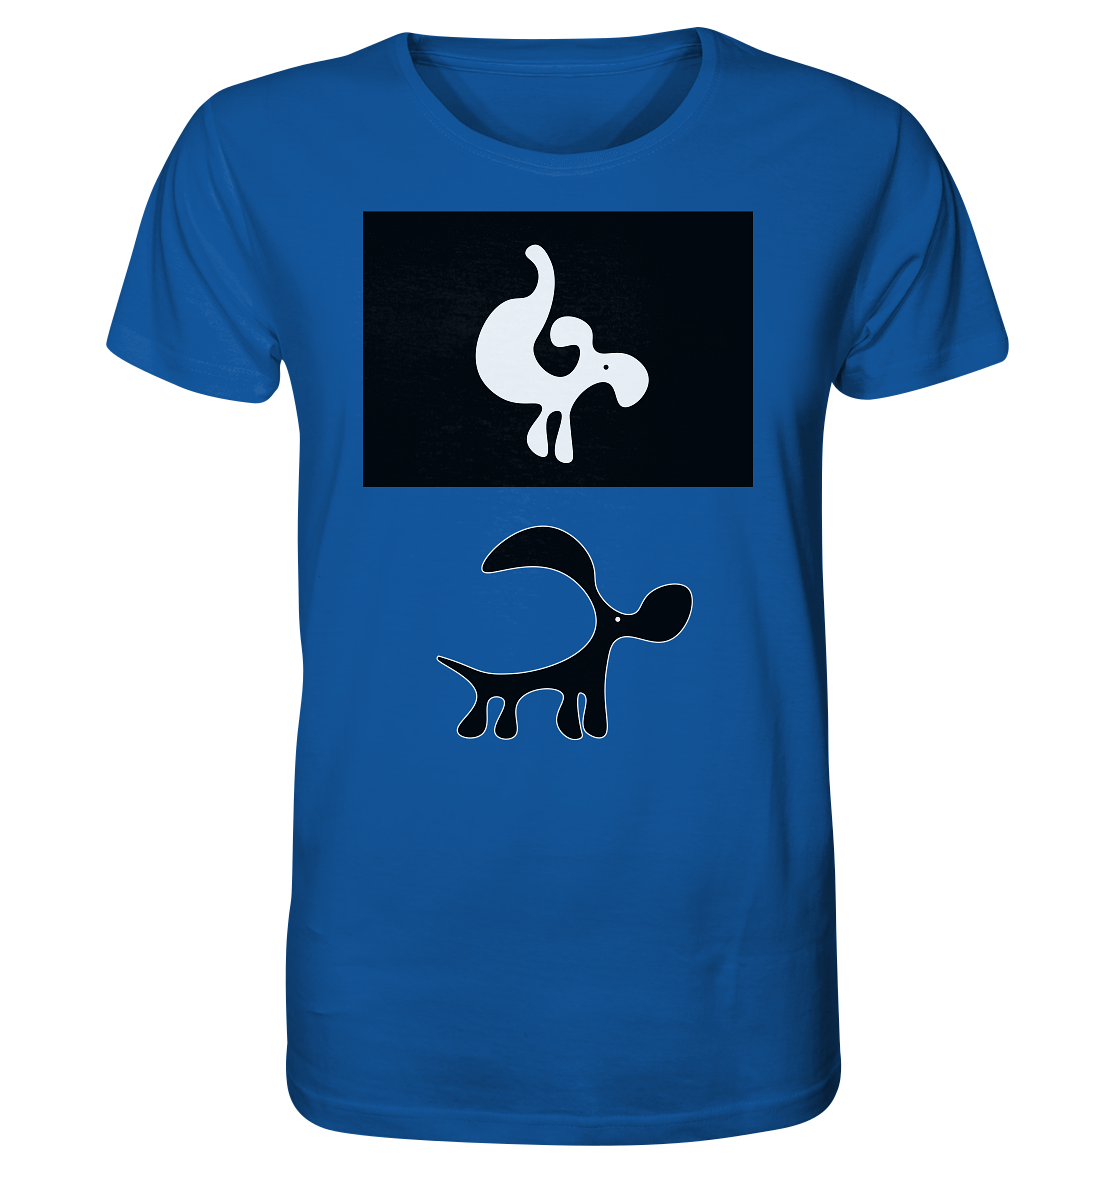 doubledog - Organic Shirt